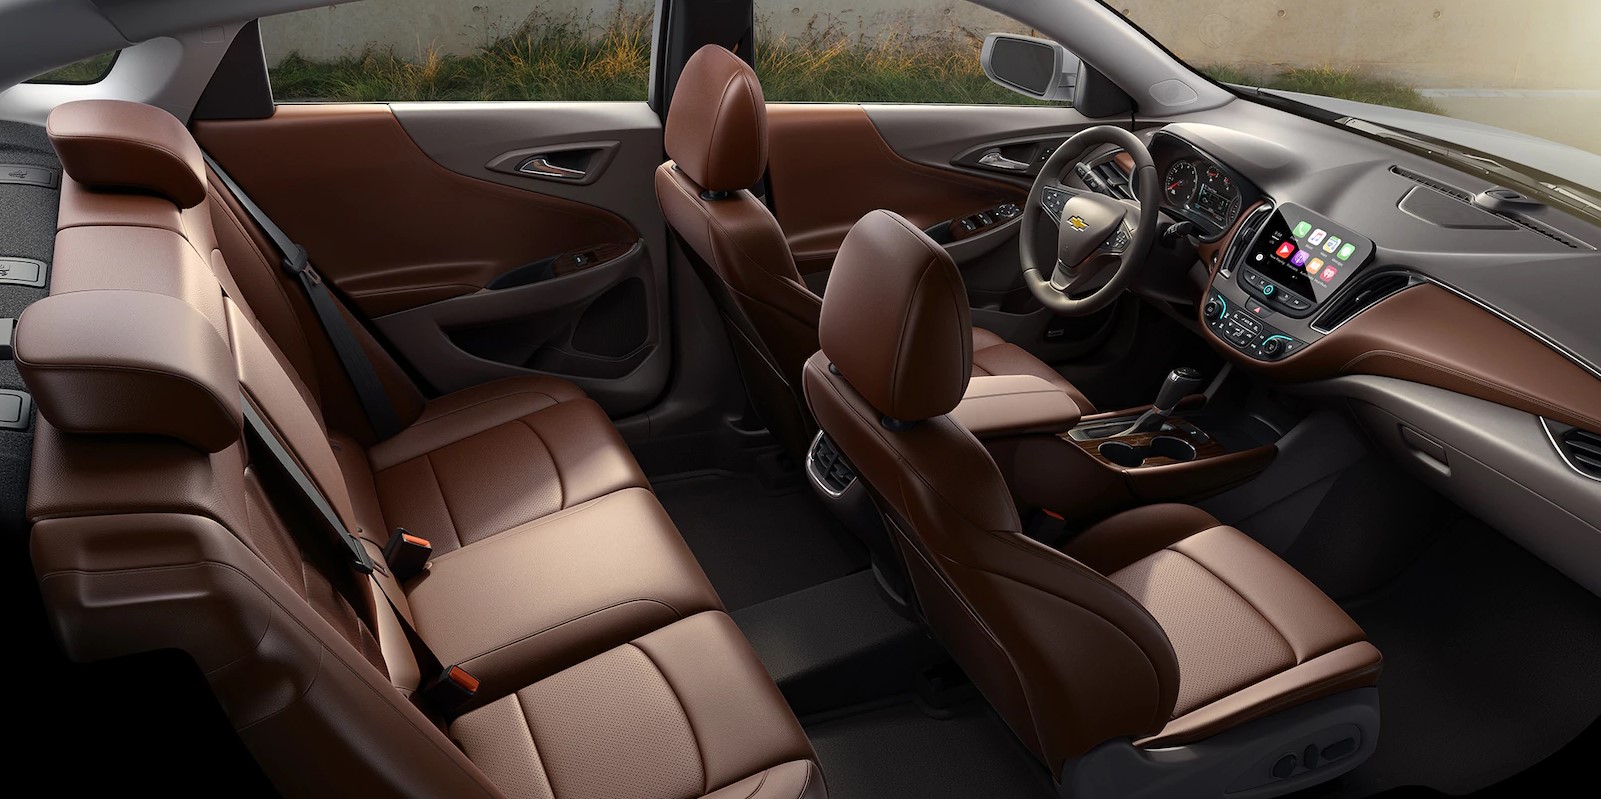 2018 Chevrolet Malibu Brown Leather Interior